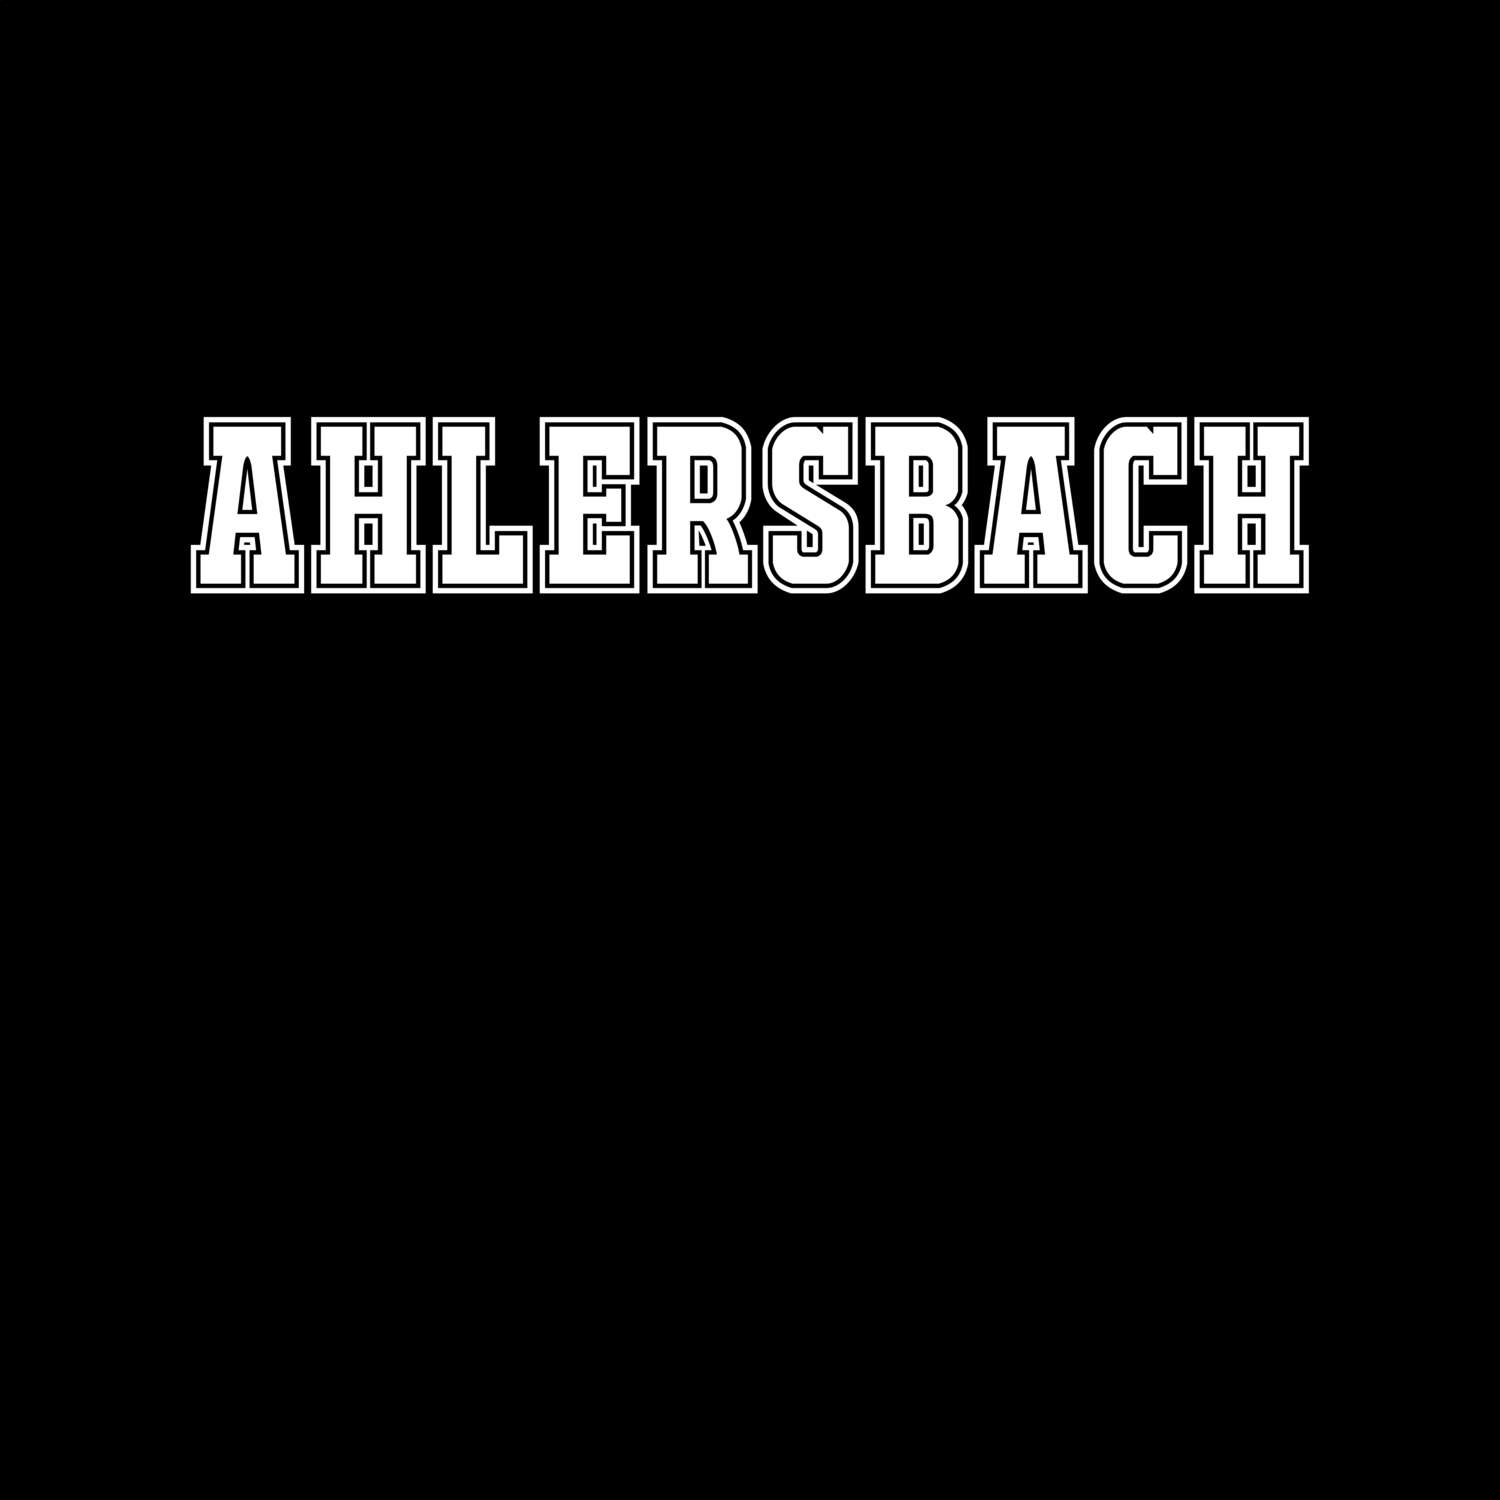 Ahlersbach T-Shirt »Classic«